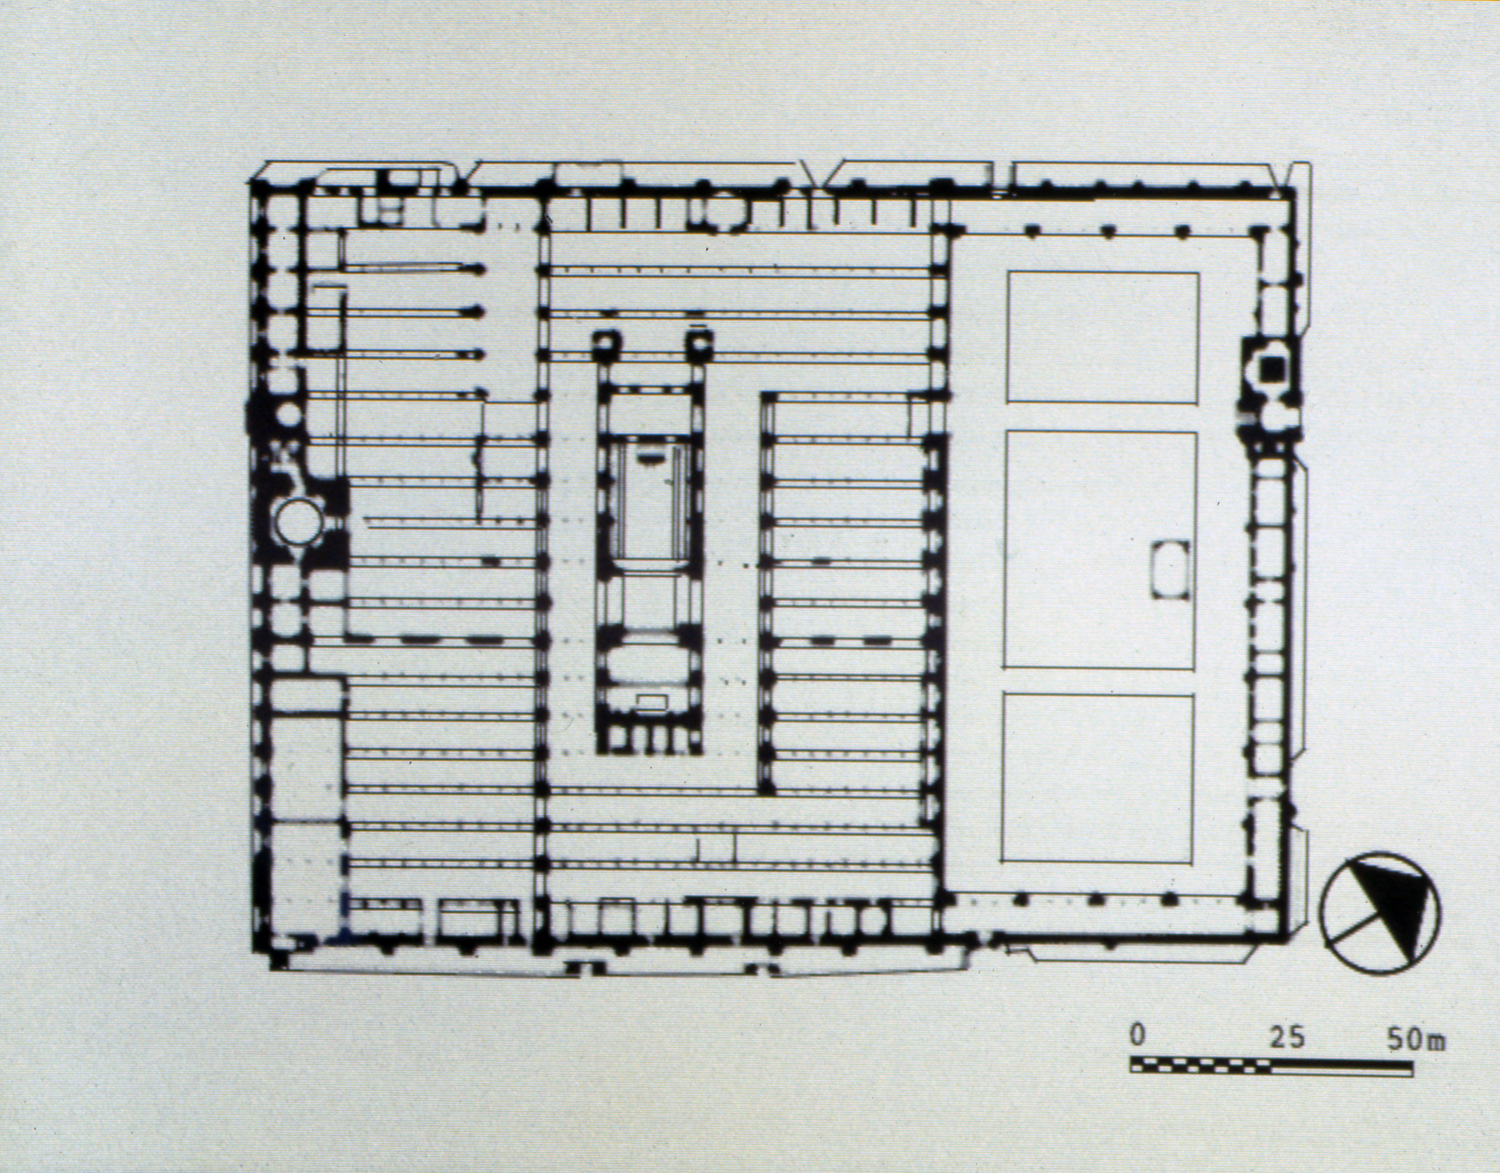 Mezquita de Córdoba - Floor plan (after Michell)